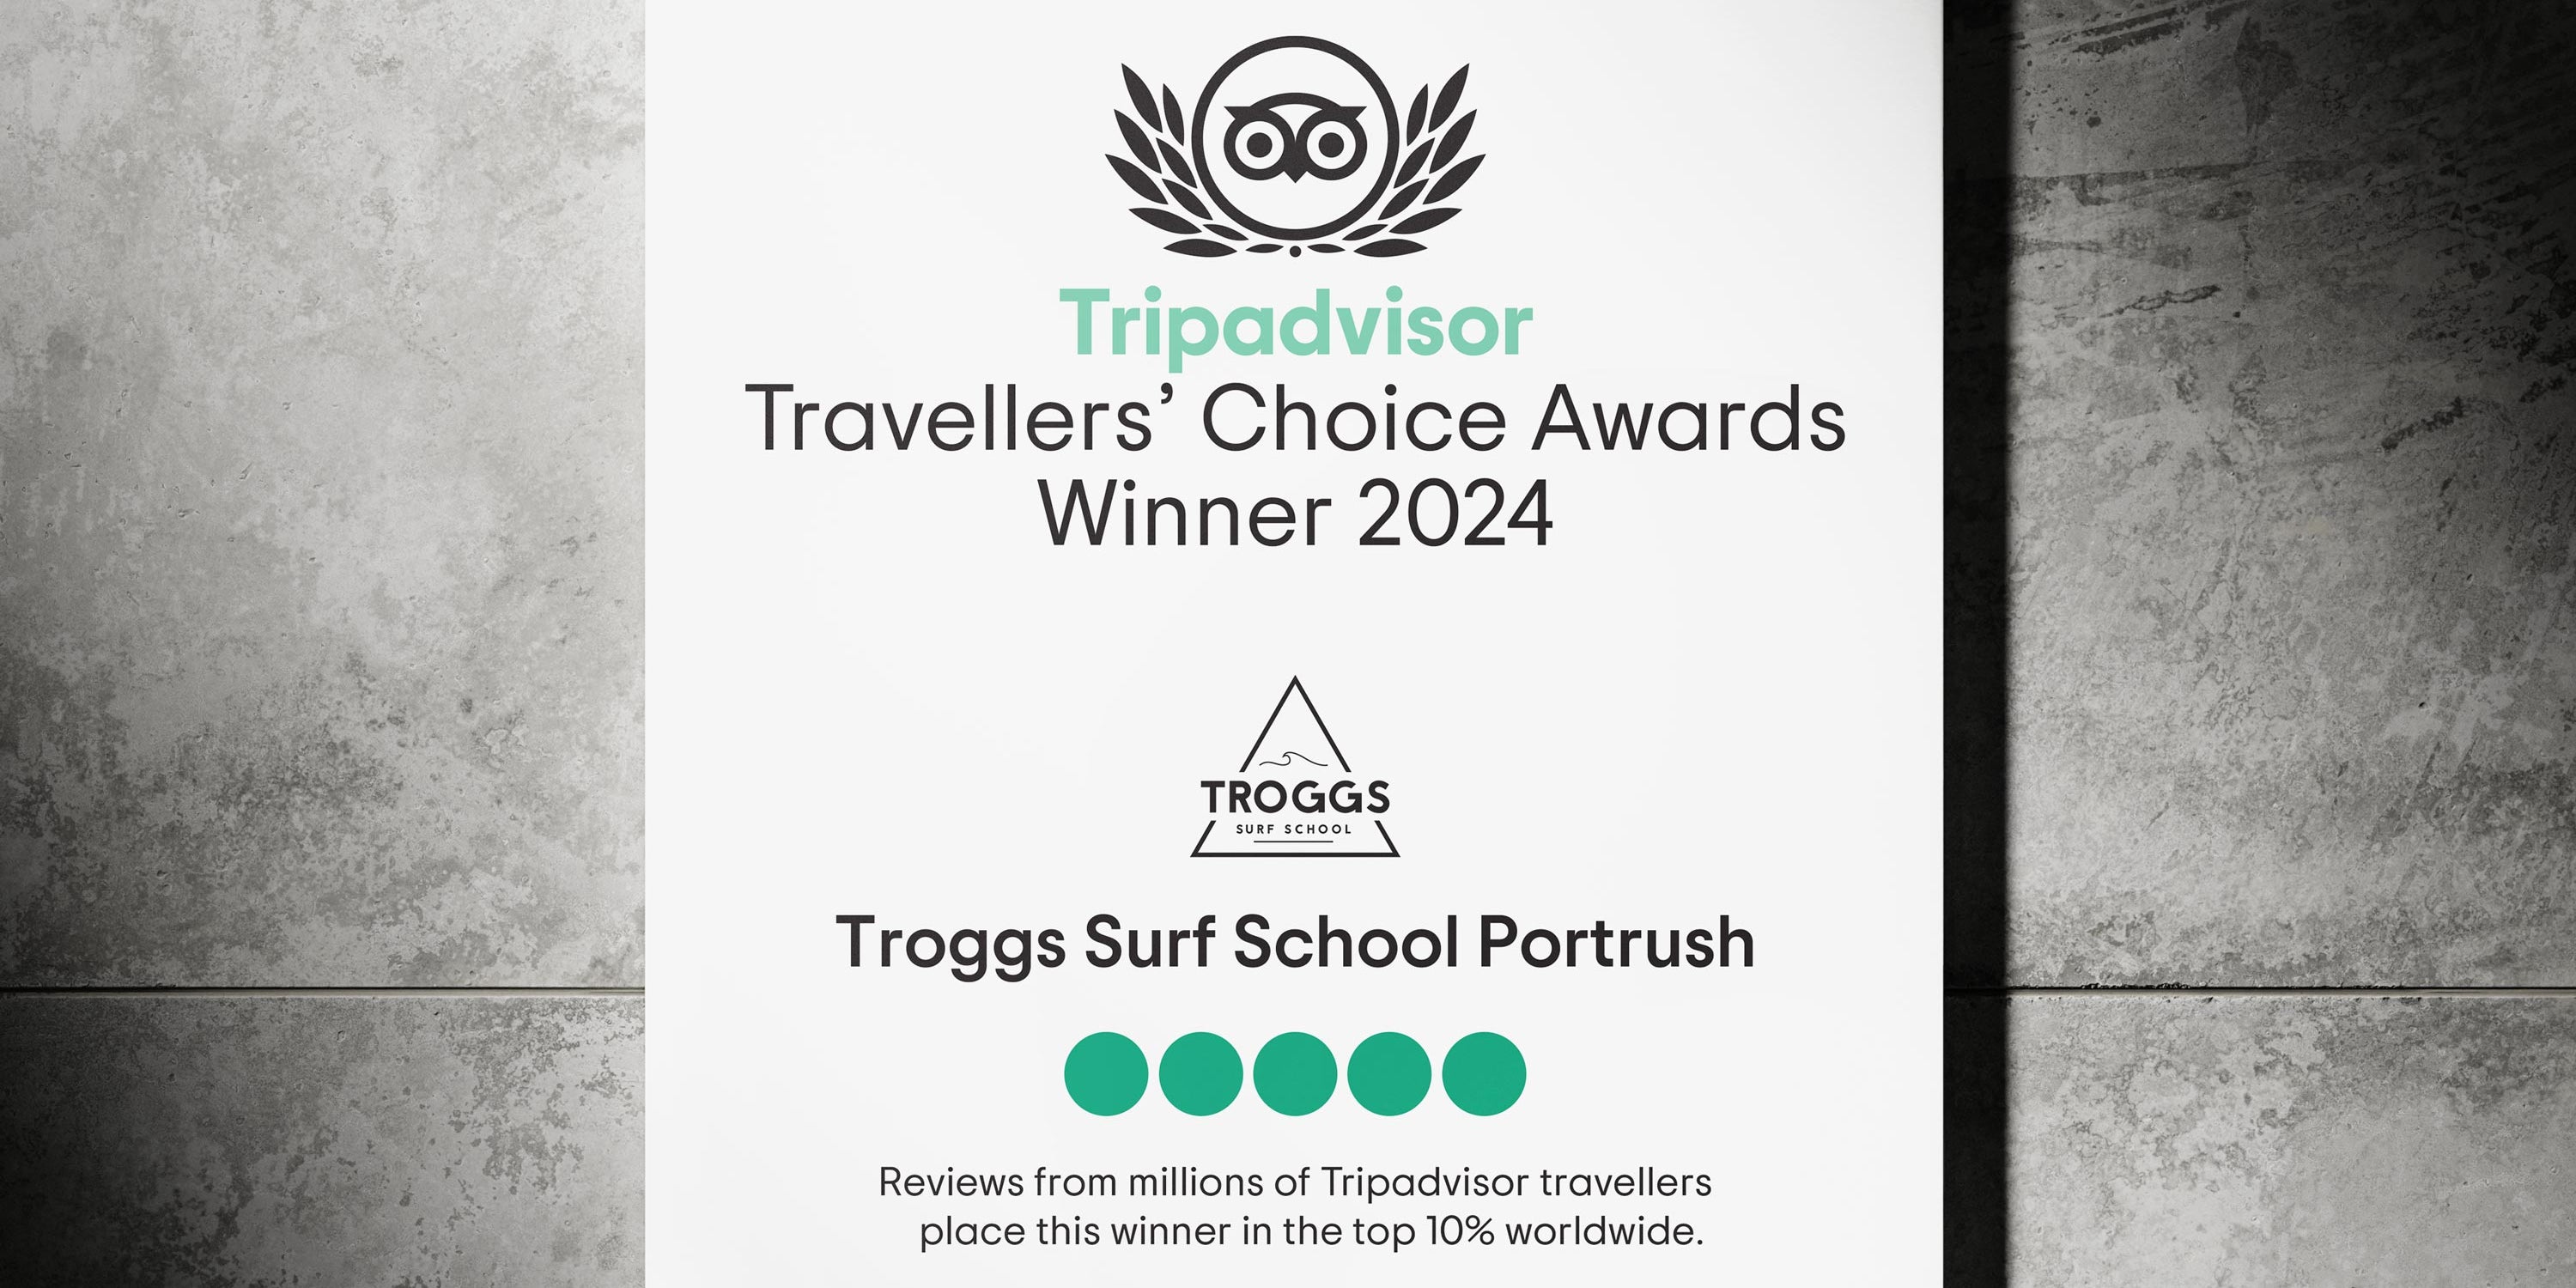 We are among the top 10% of things to do worldwide! - TripAdvisor Travelers' Choice Award 2024